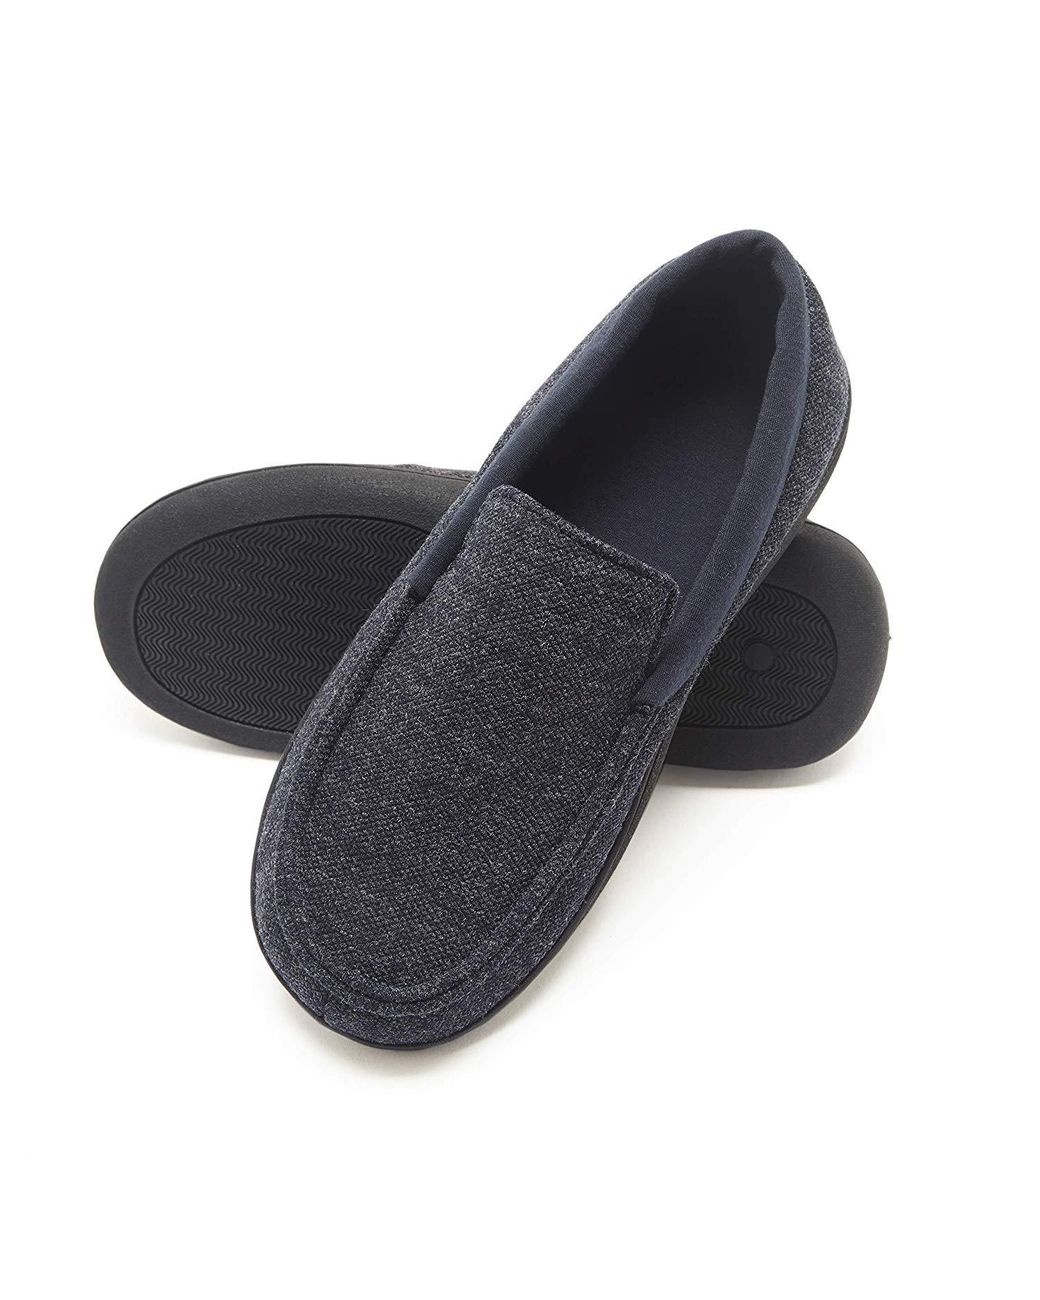 Hanes S Slippers House Shoes Moccasin Comfort Memory Foam Indoor ...